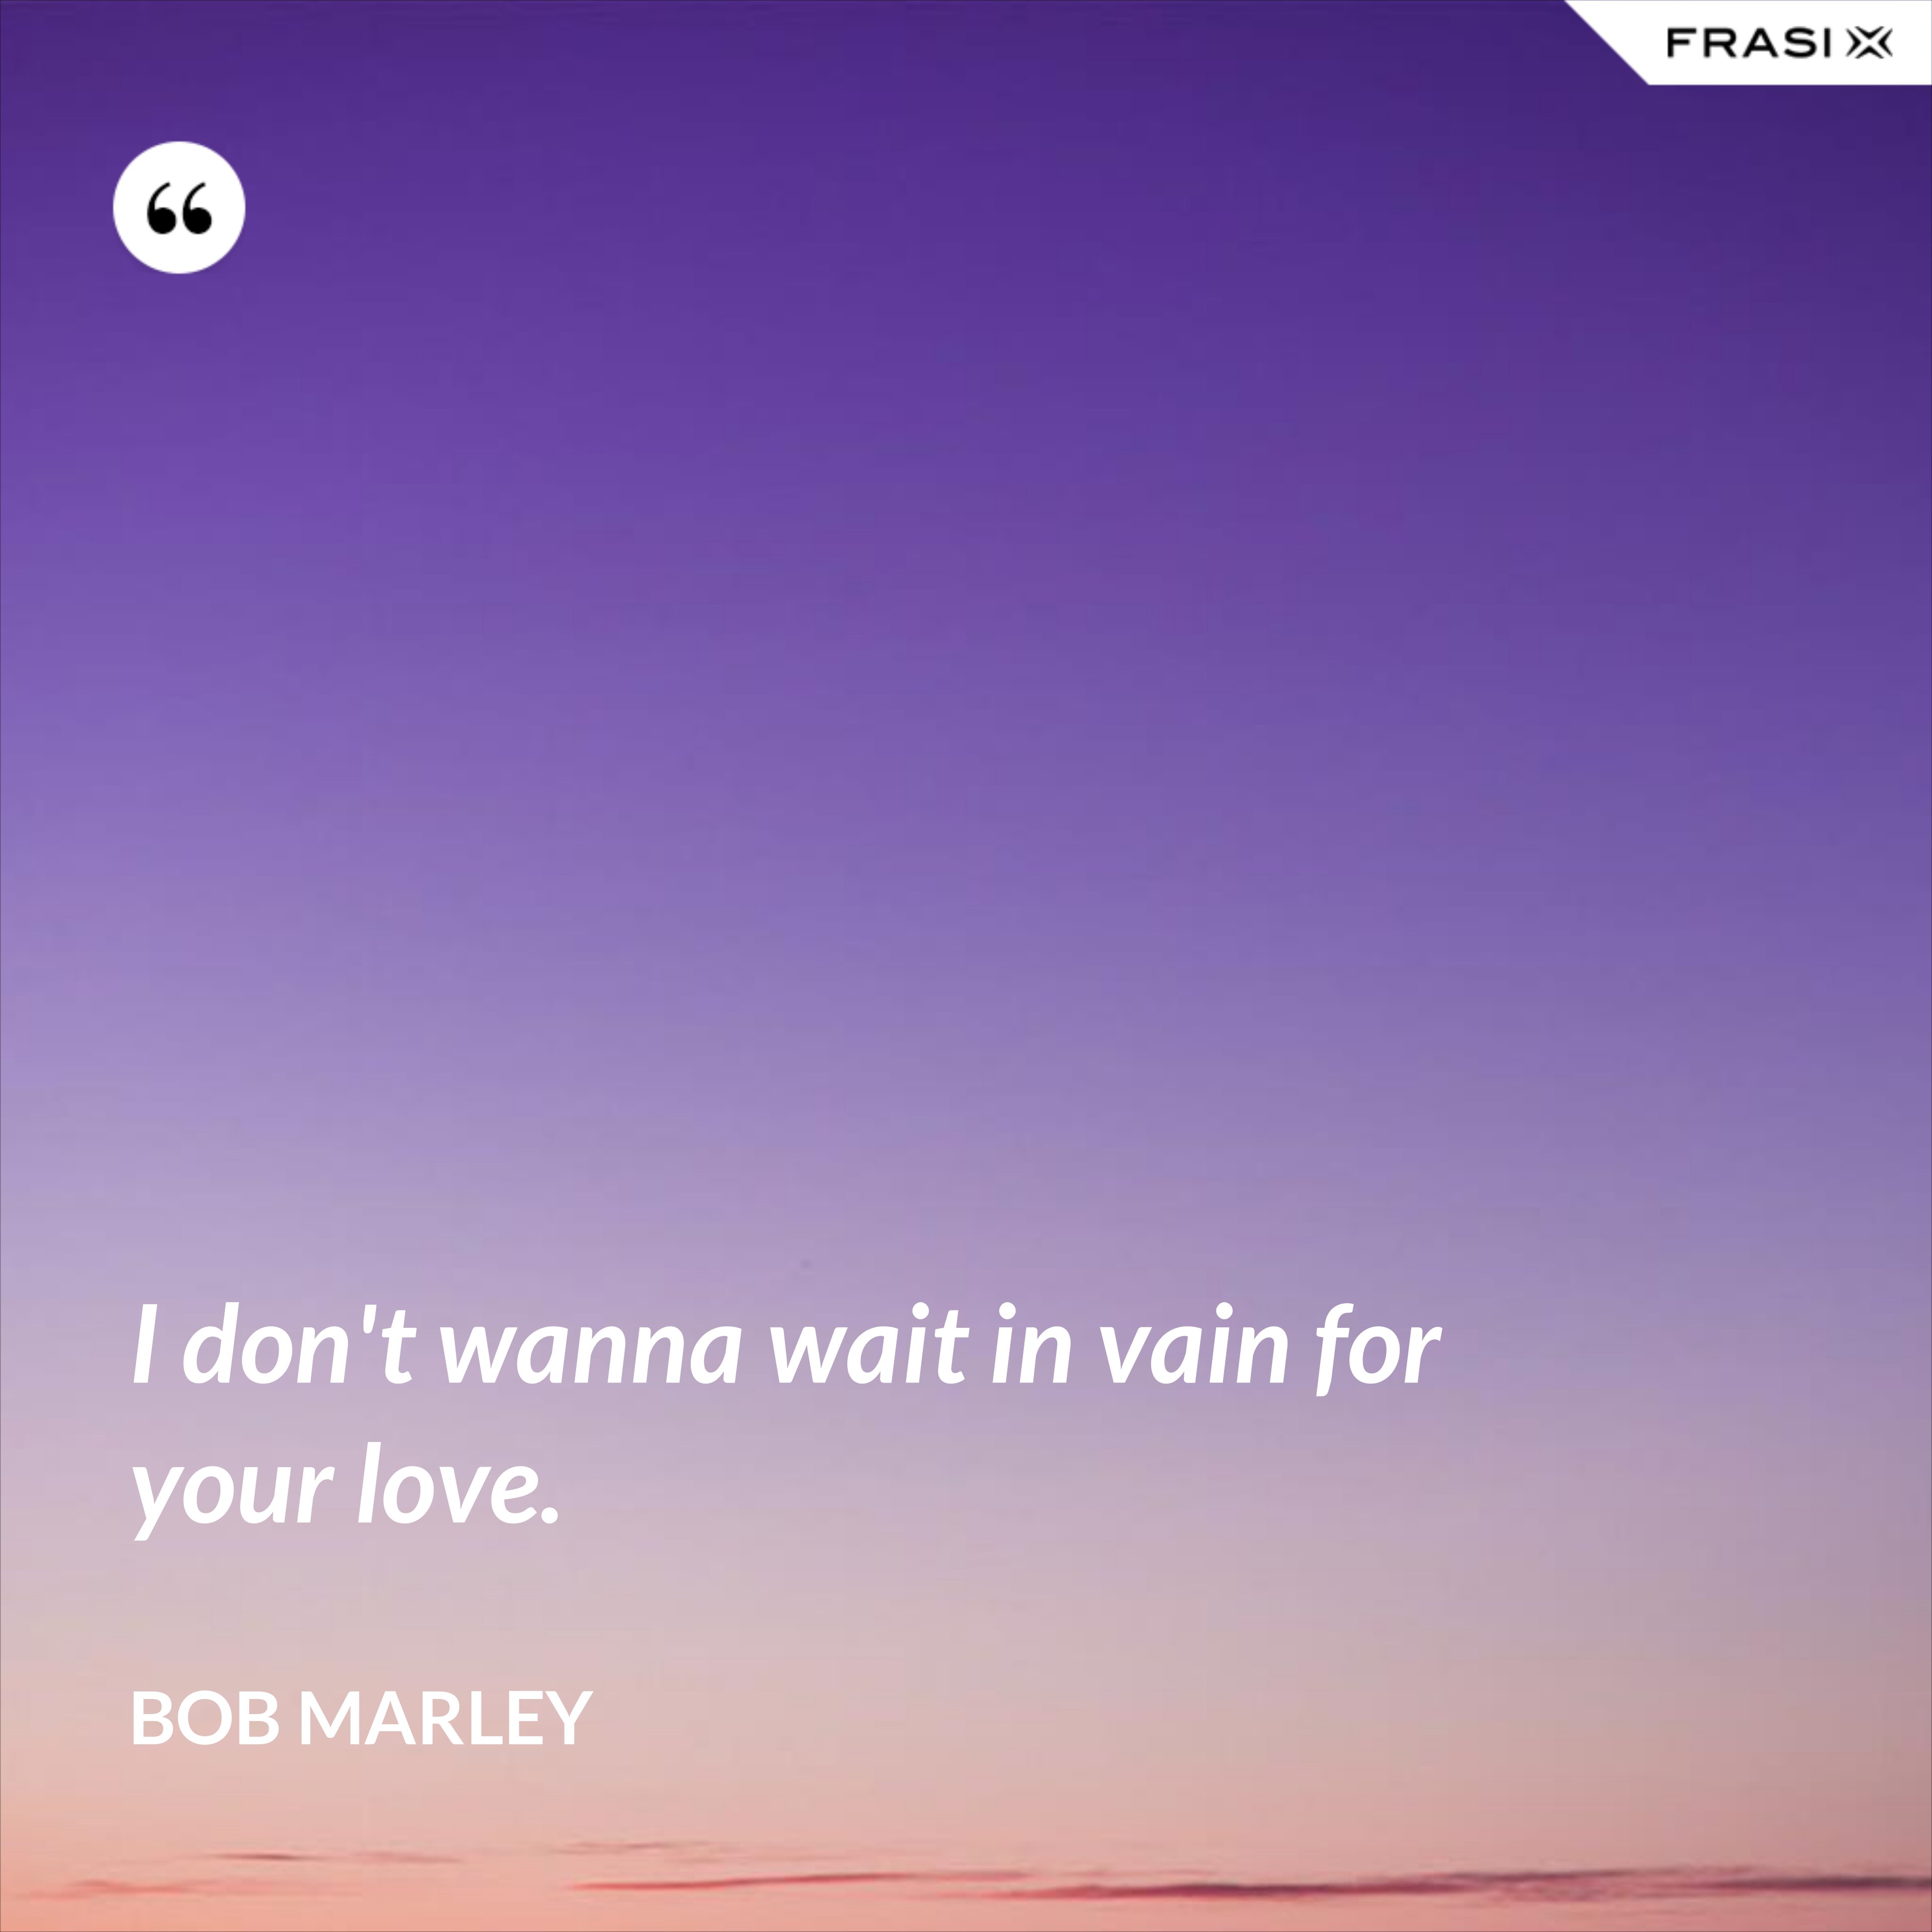 I don't wanna wait in vain for your love. - Bob Marley